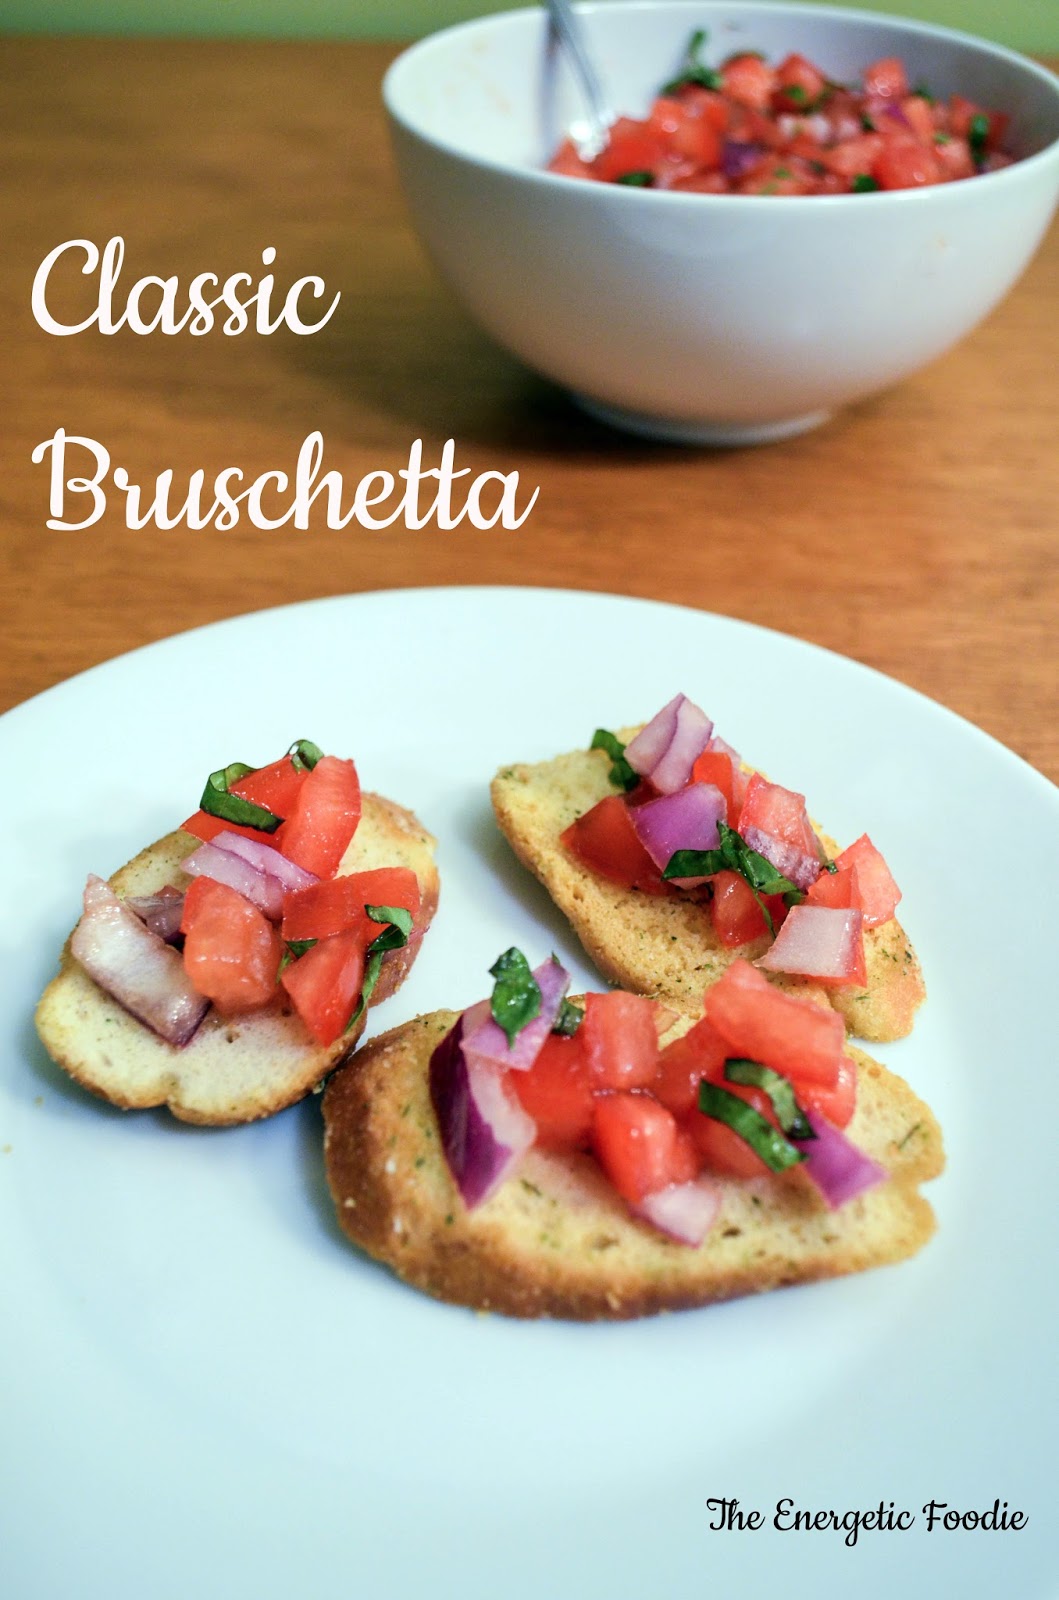 The Energetic Foodie: Classic Bruschetta